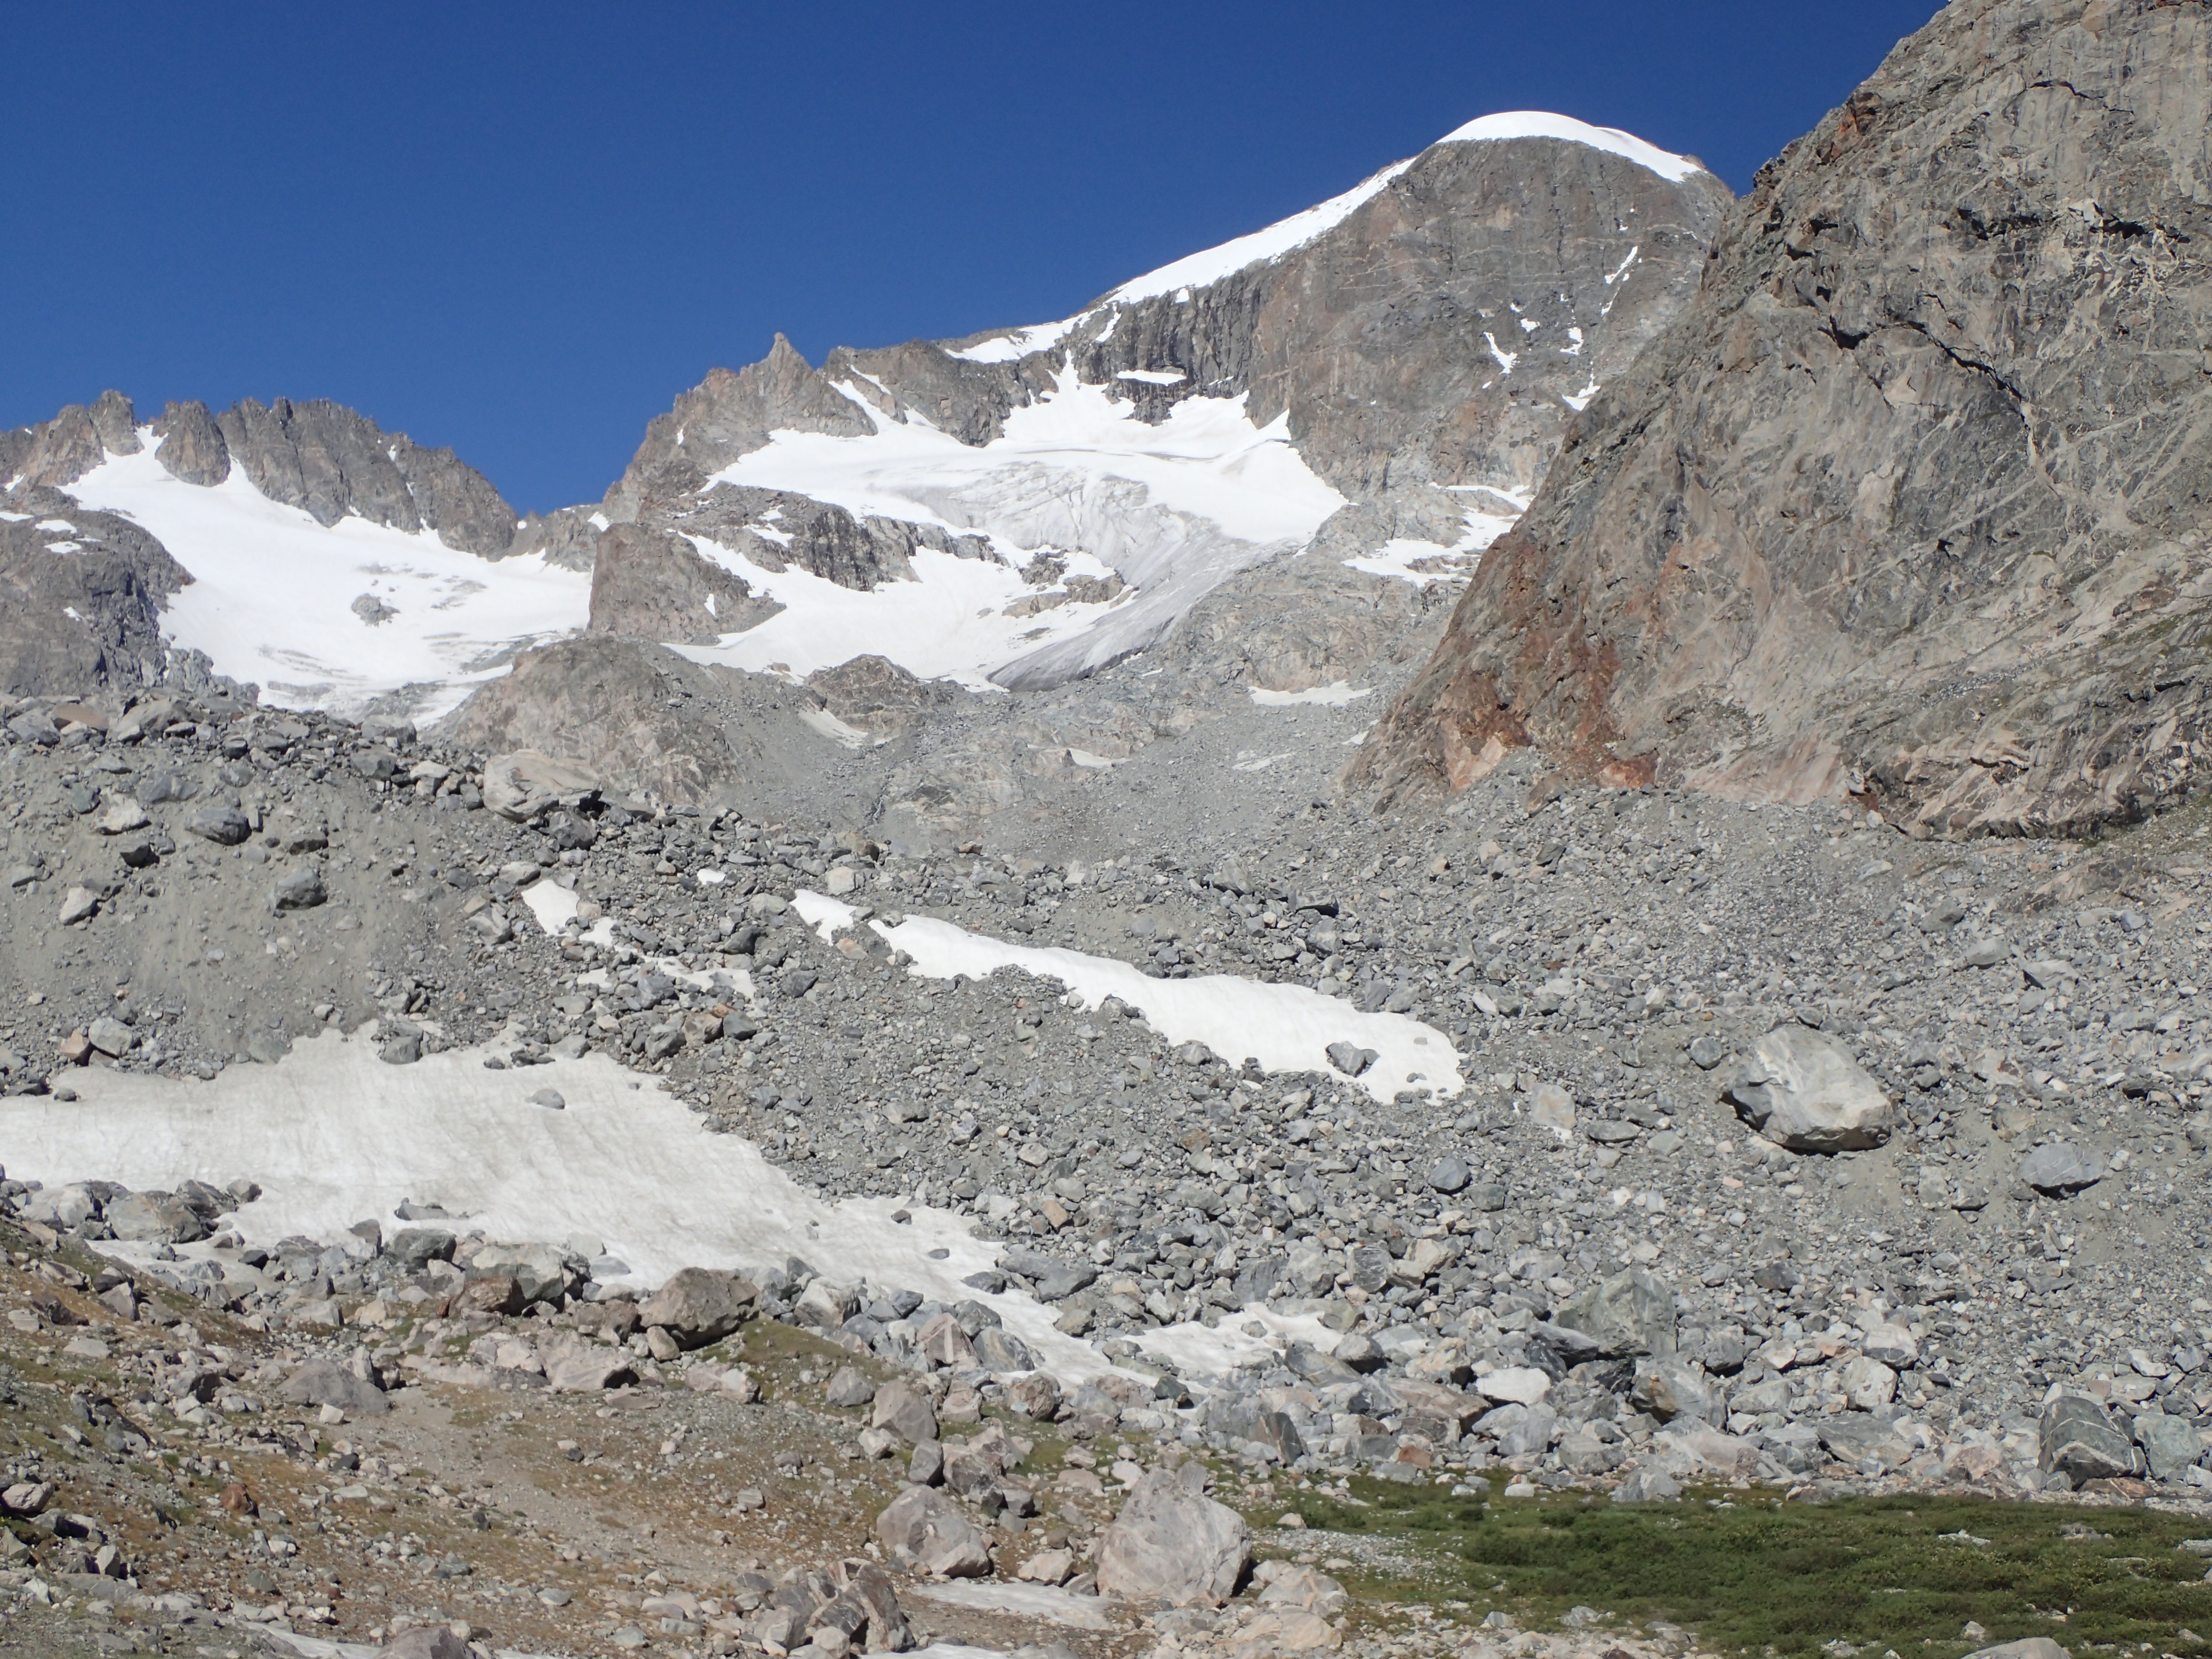 Gannett Peak with Gooseneck Glacier and Pinnacle